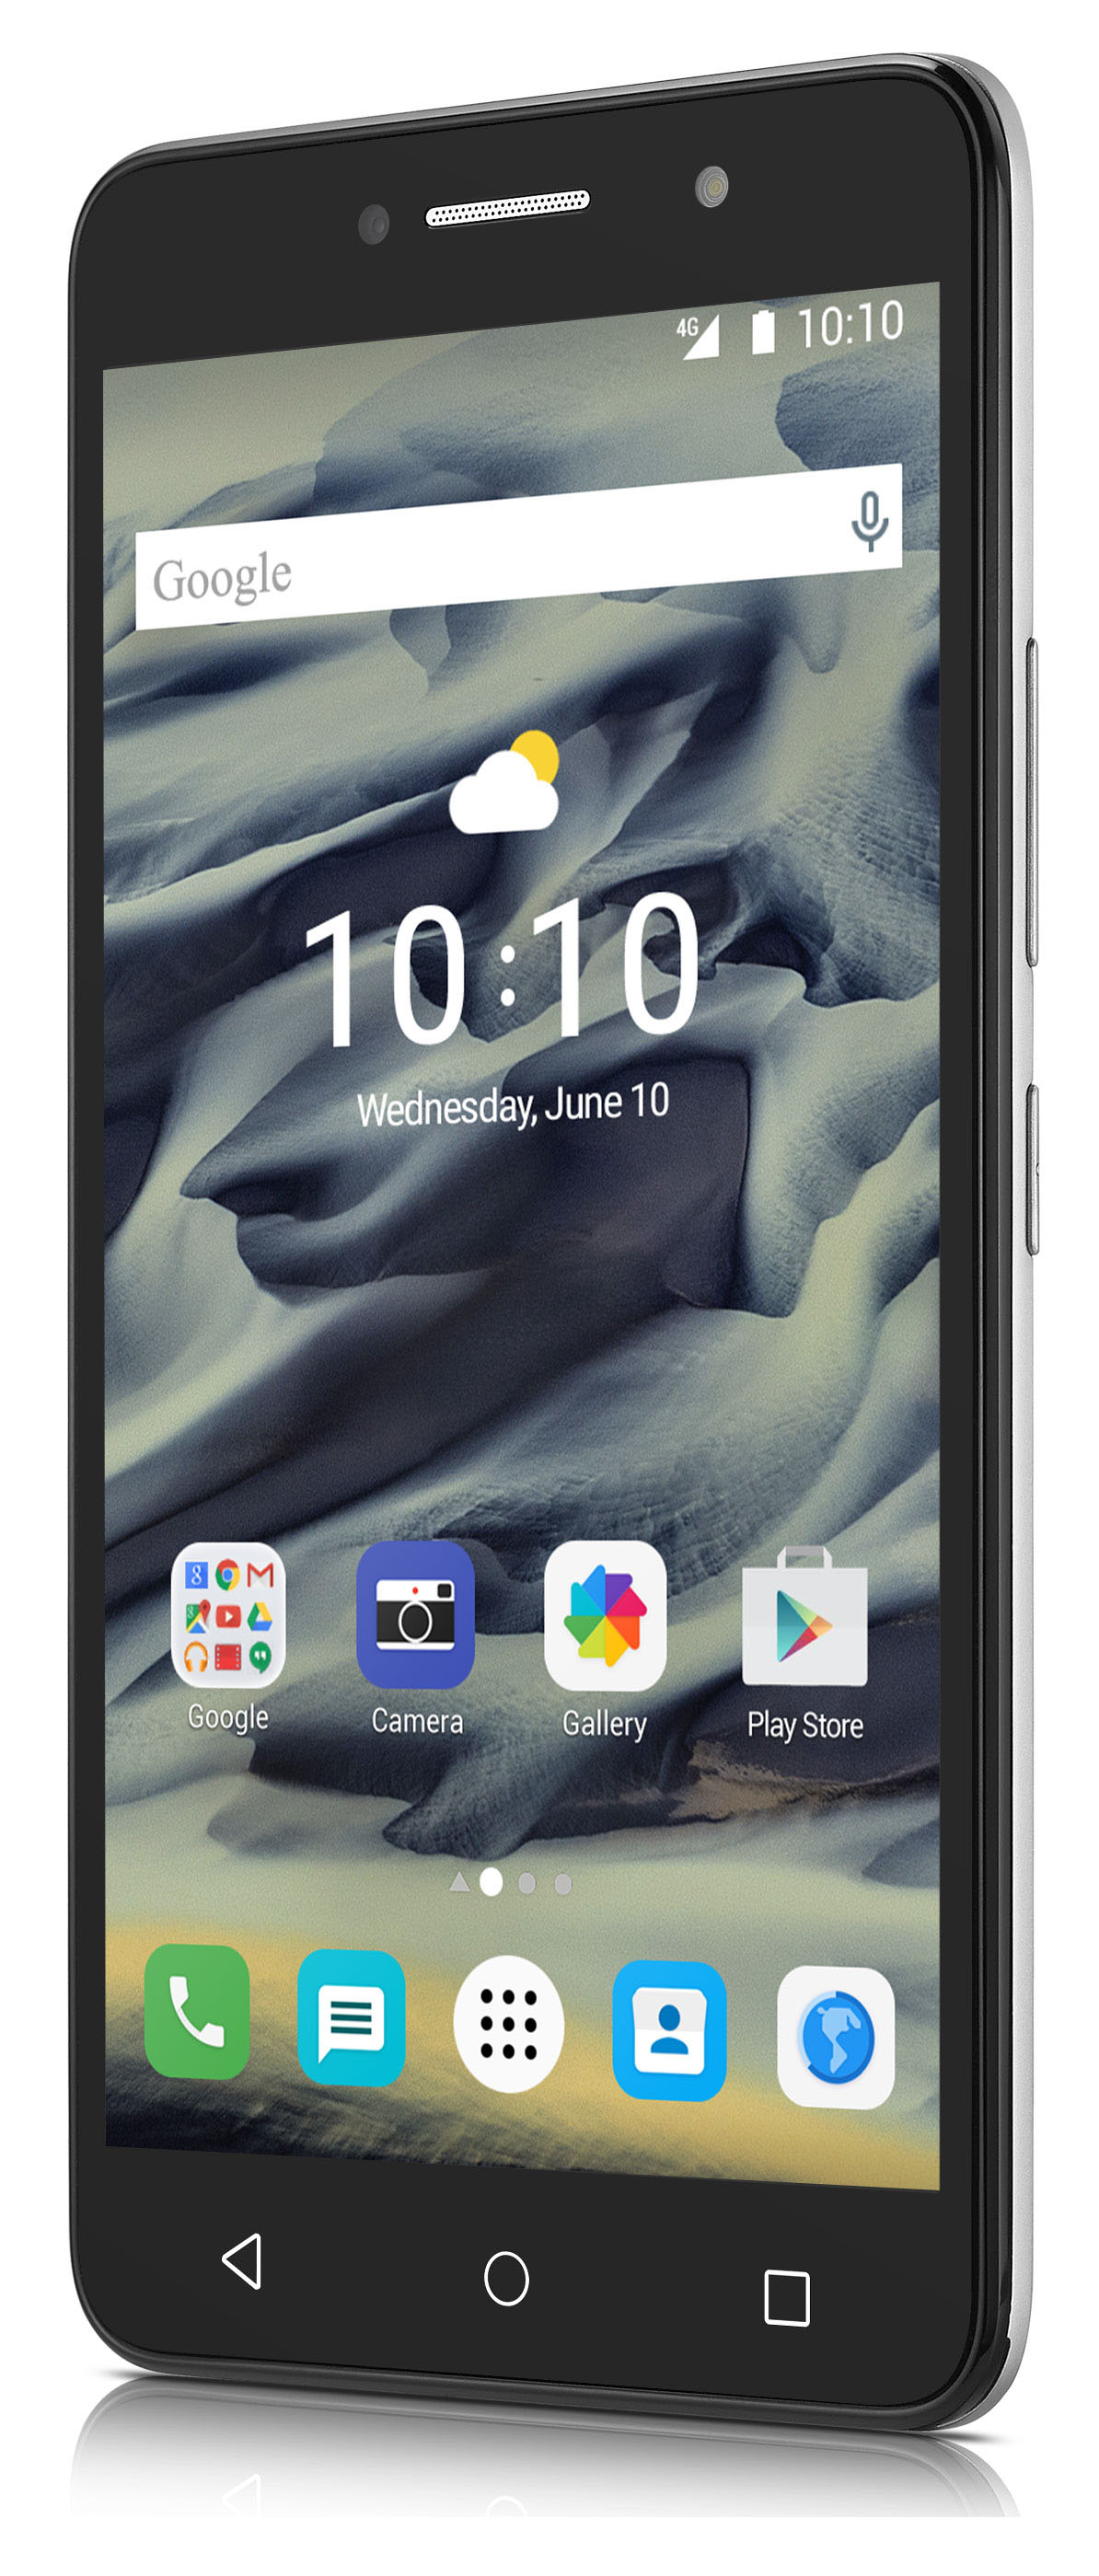 Alcatel Pixi 4 16GB Unlocked GSM 4G LTE Quad-Core Phone w/ 8MP Camera - Silver - image 1 of 3